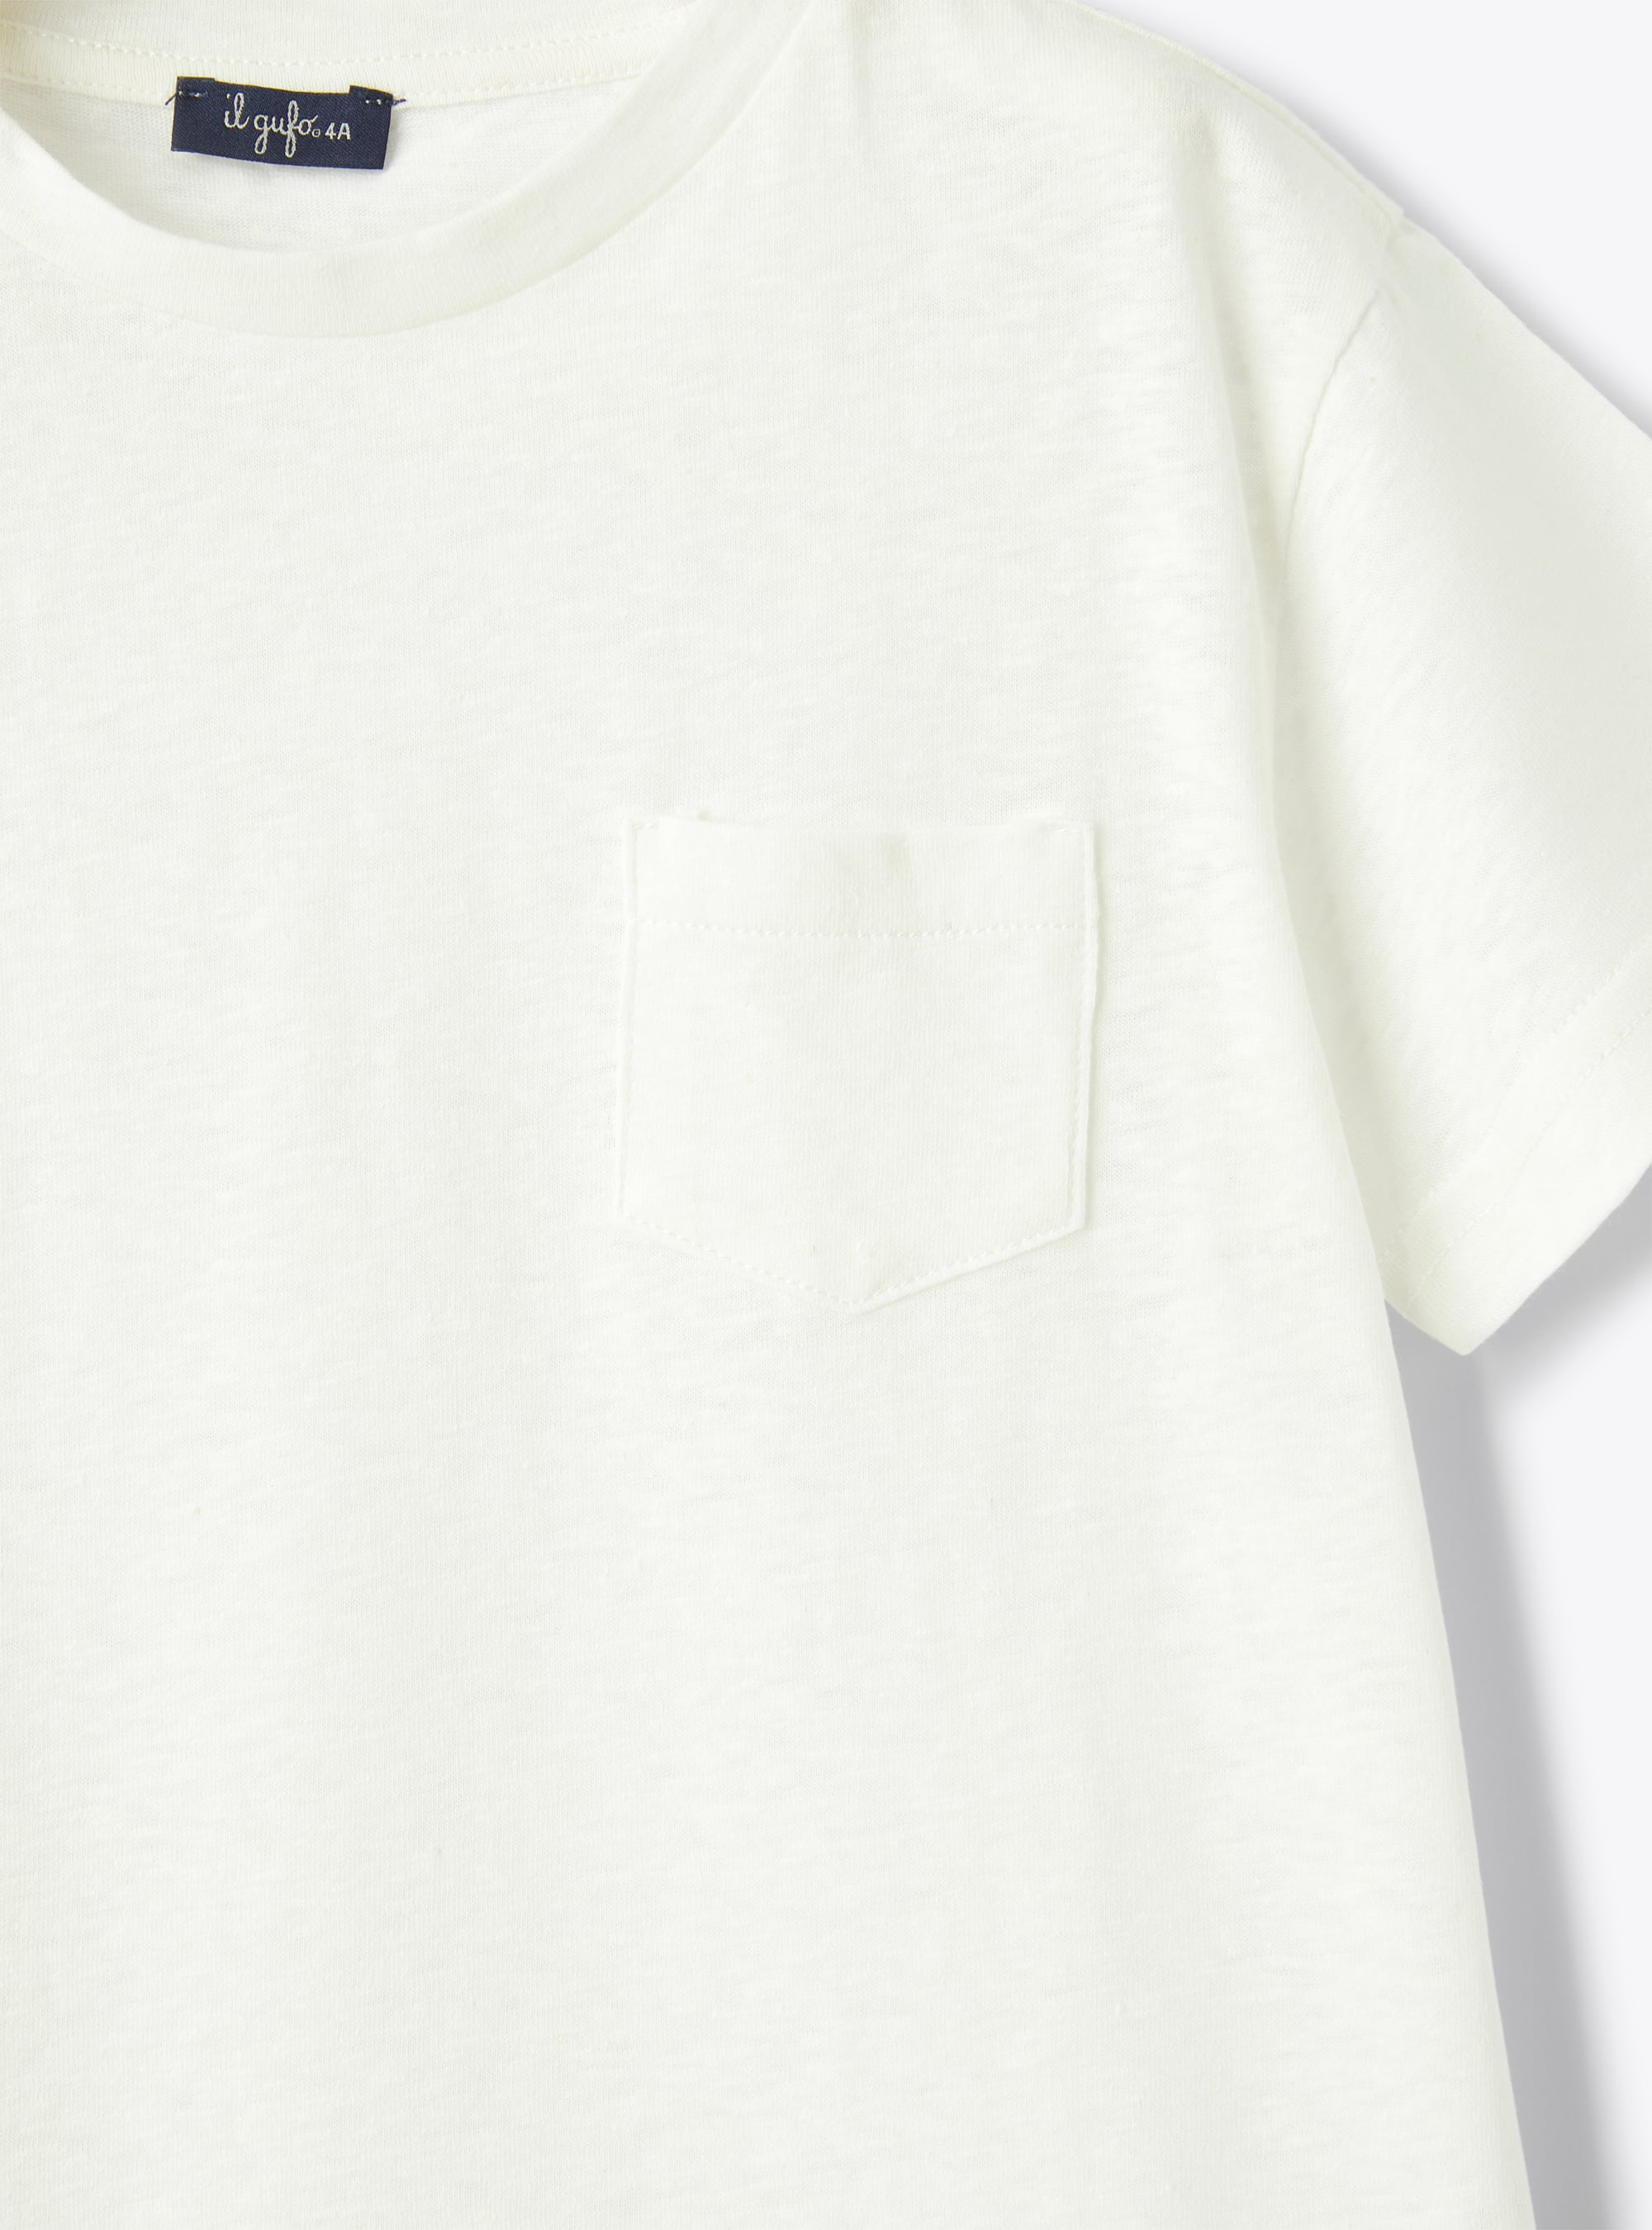 T-shirt in cotton and linen - White | Il Gufo